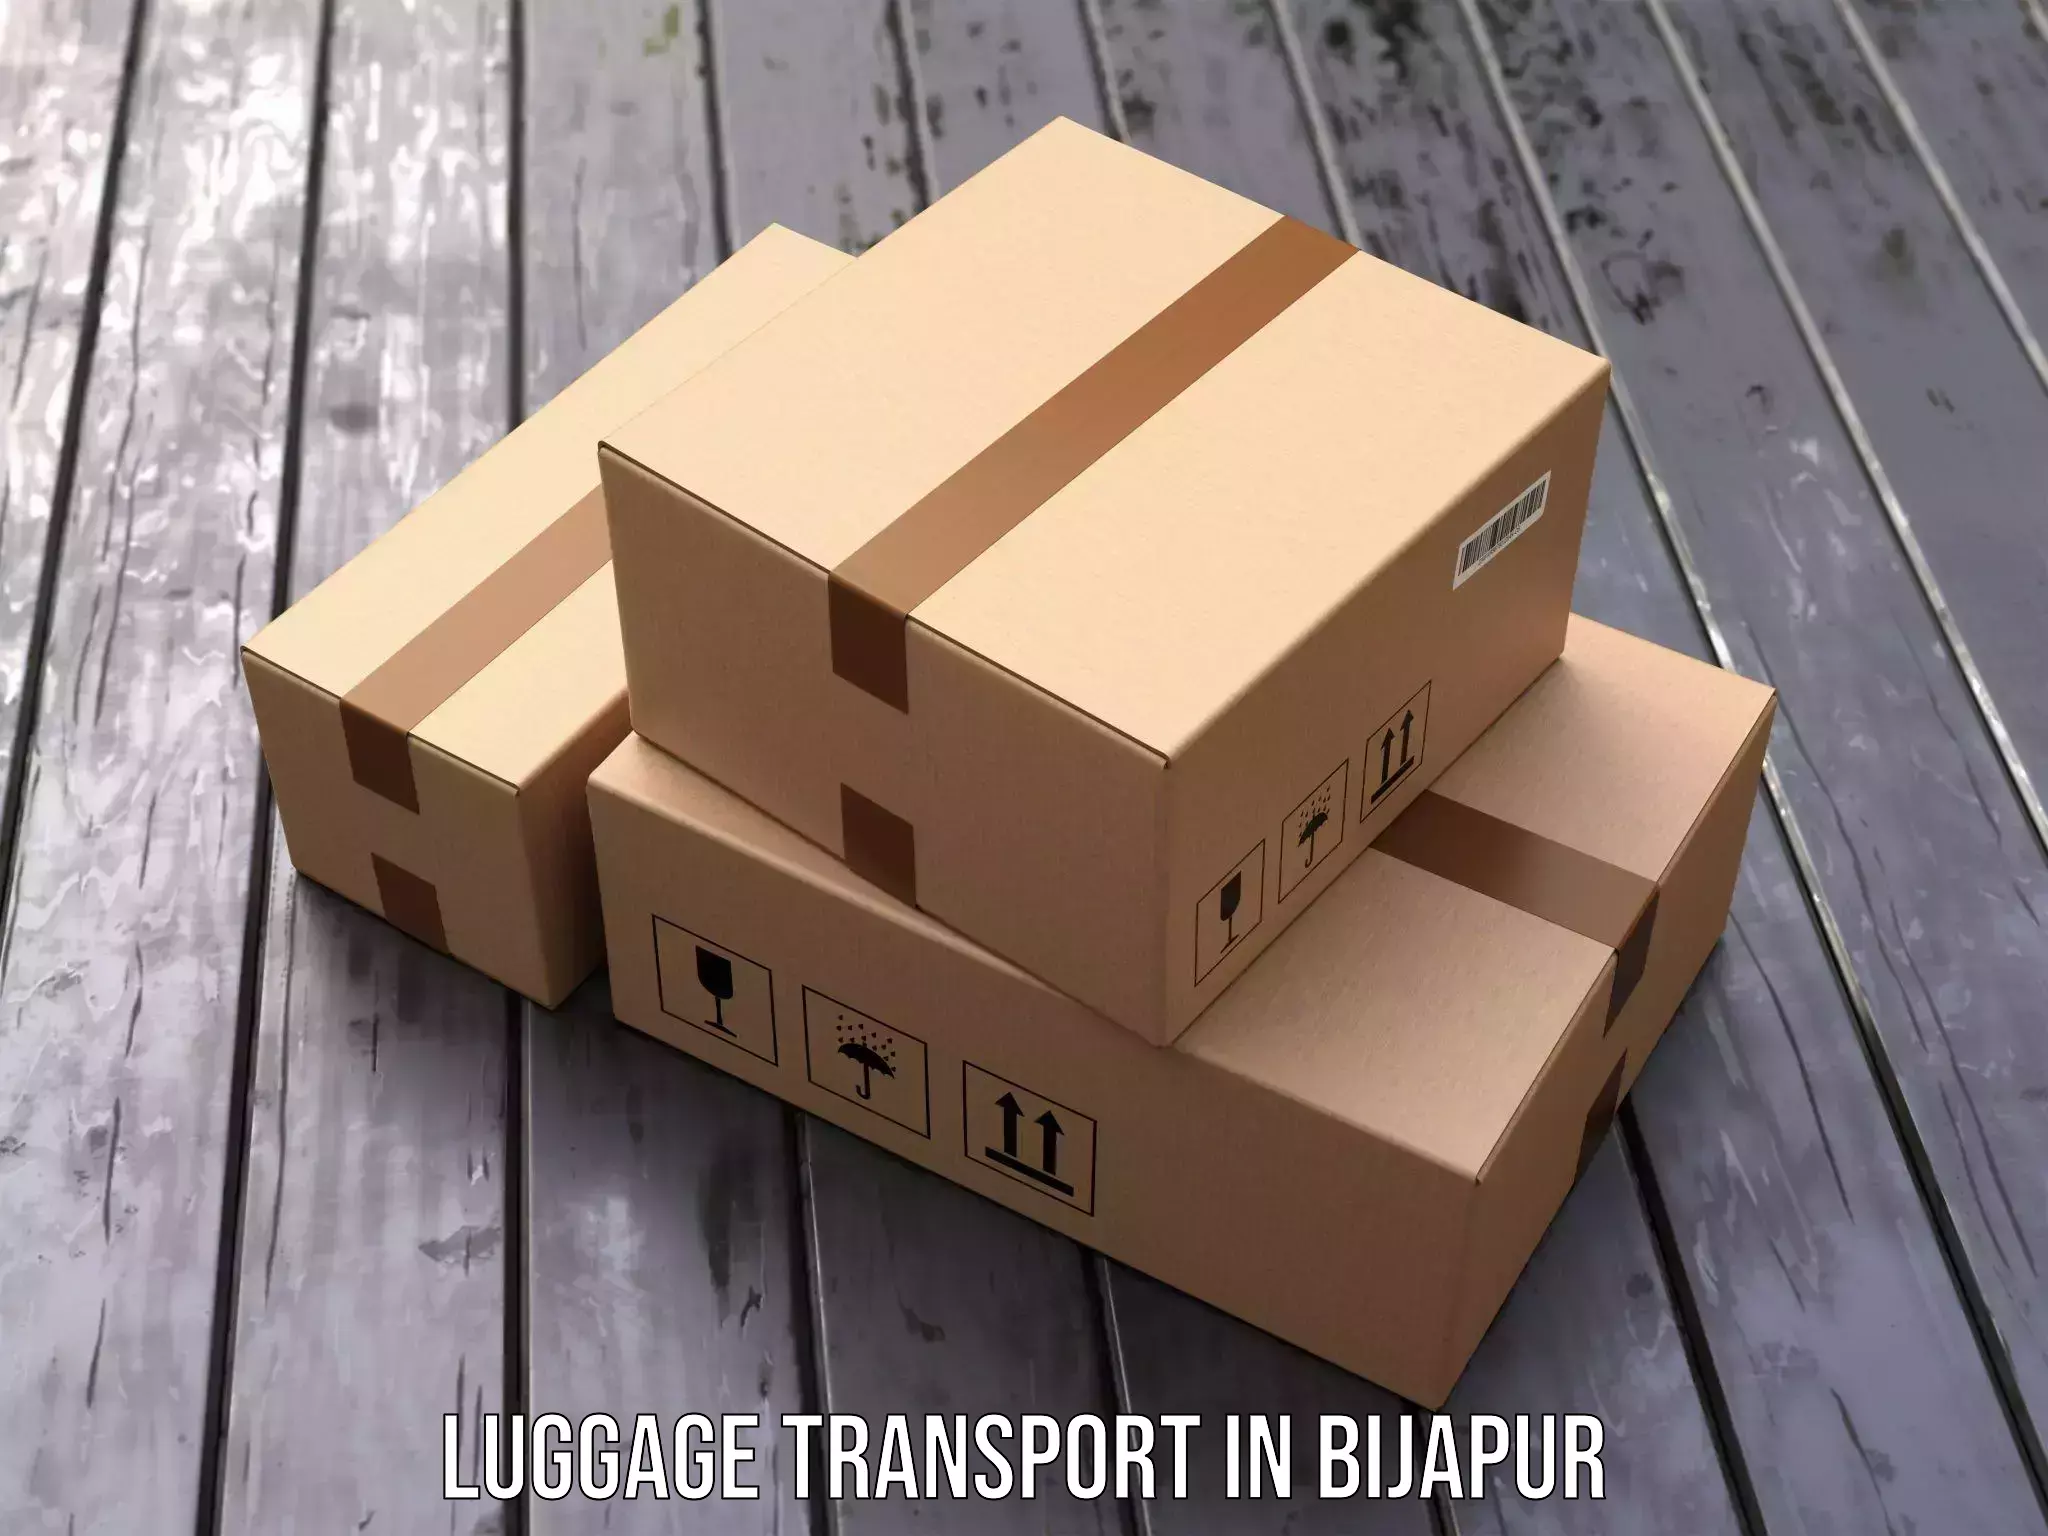 Luggage transport rates in Bijapur